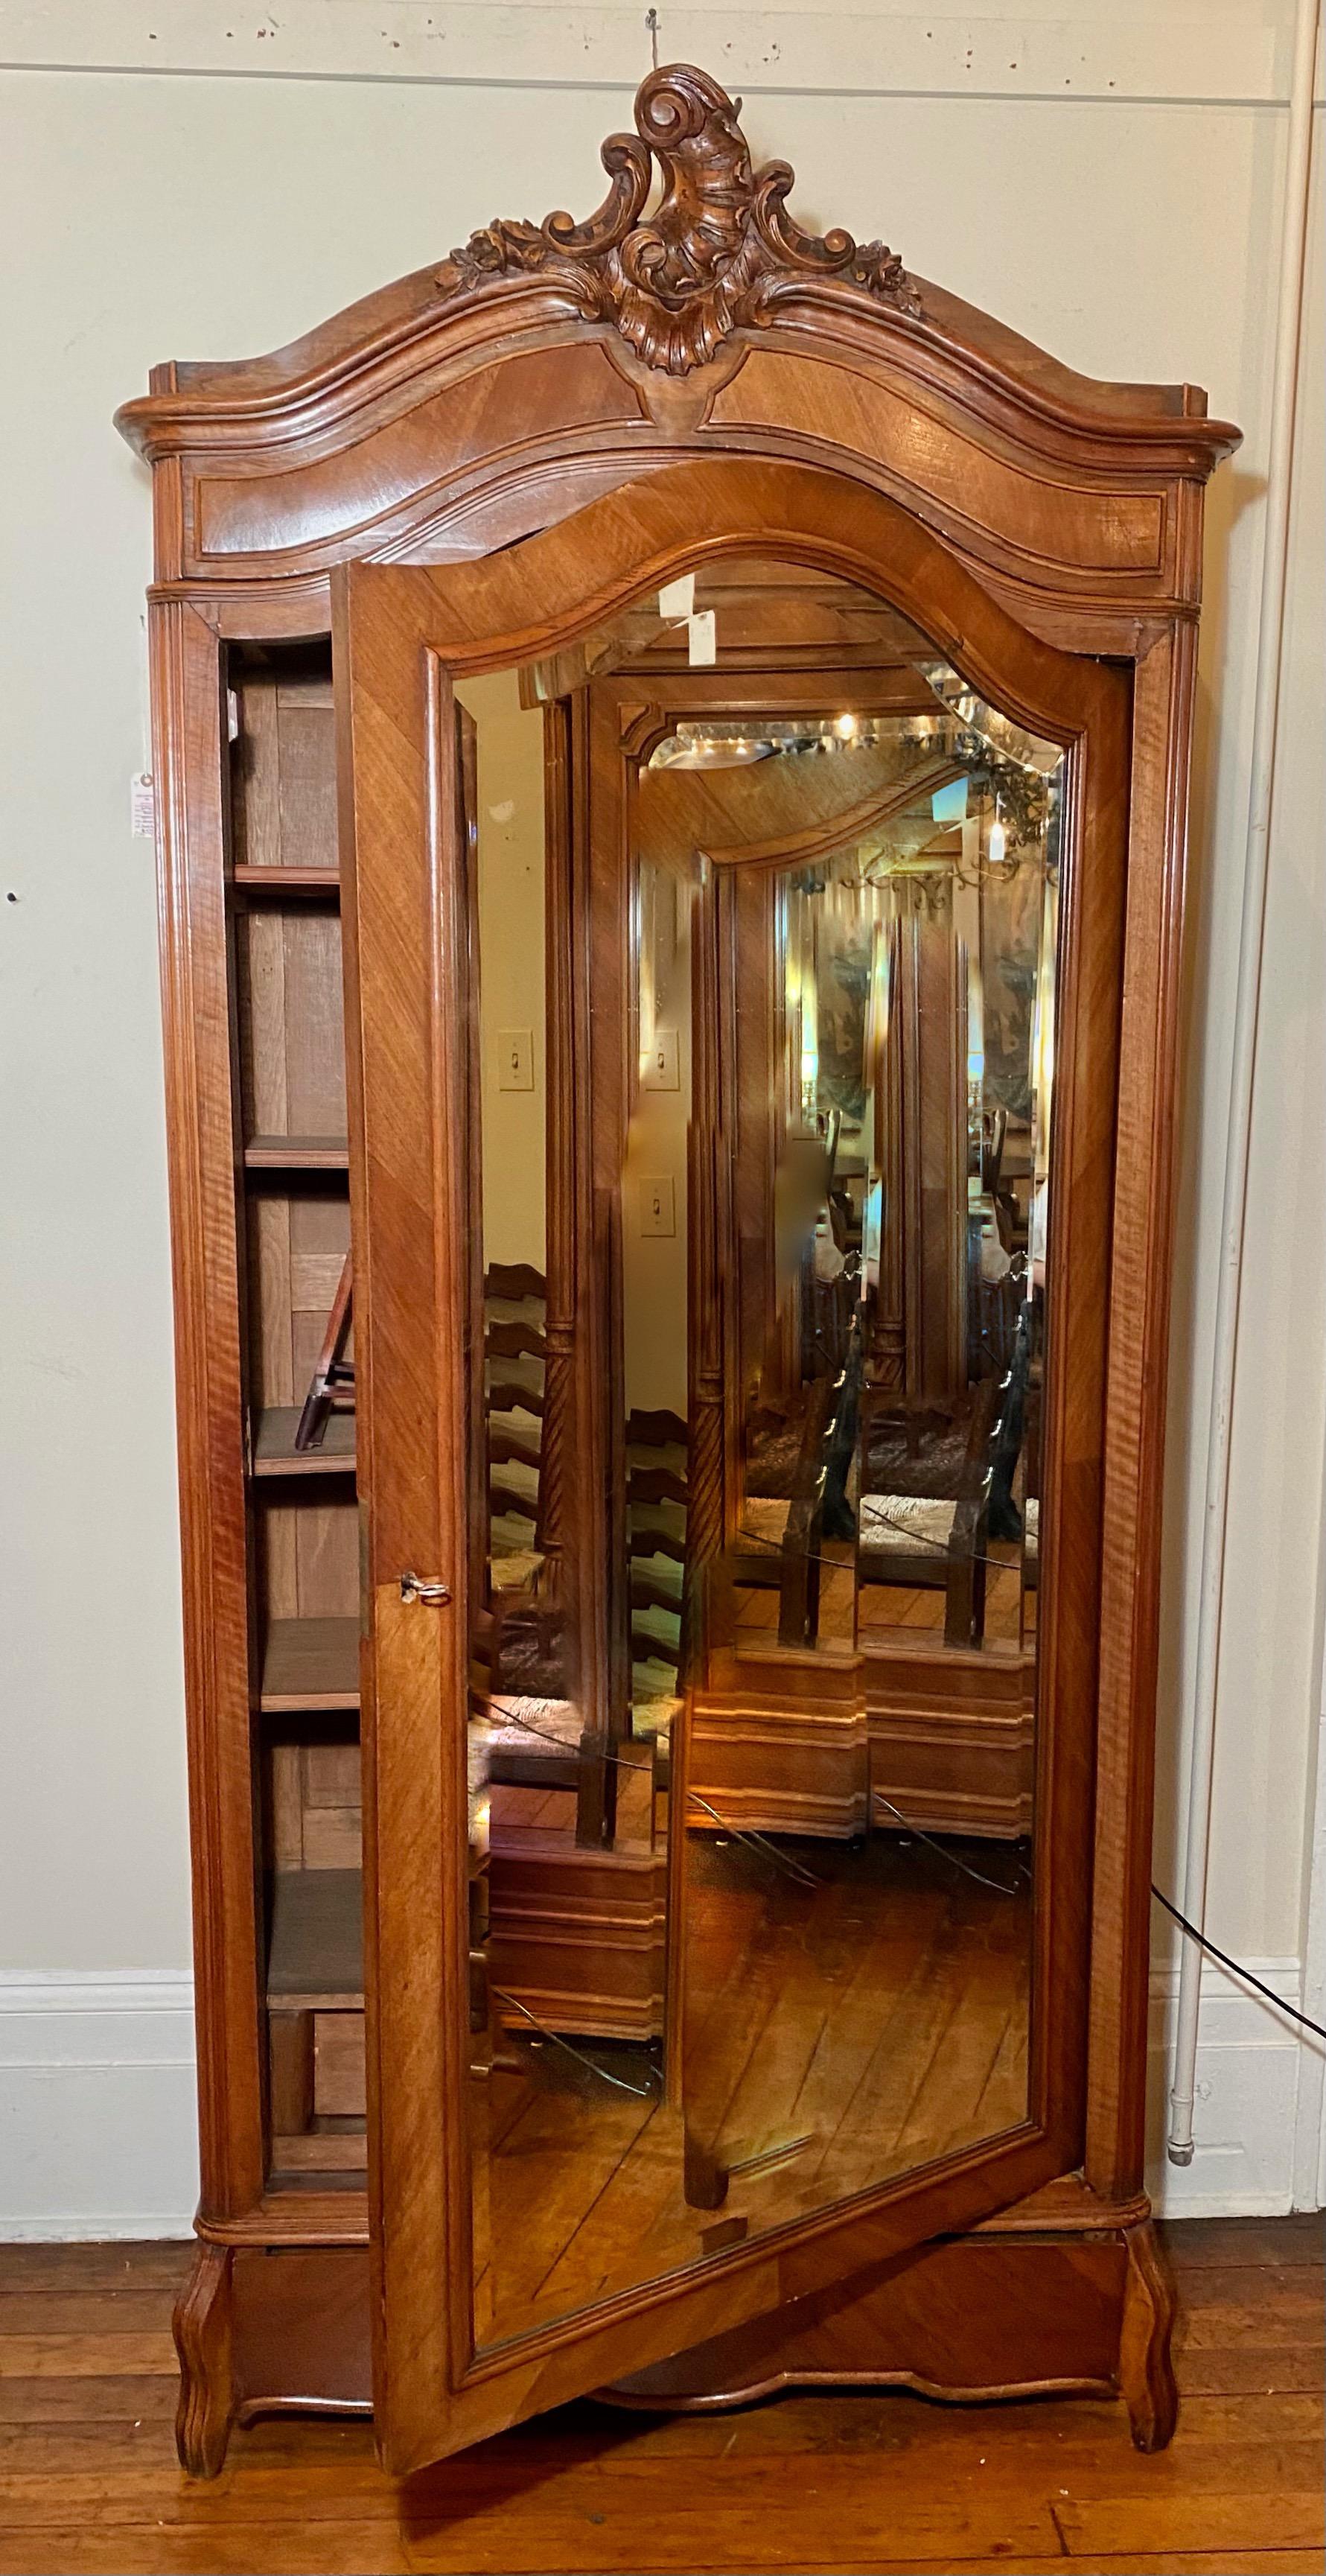 Antique French walnut beveled mirror armoire, circa 1900.

       